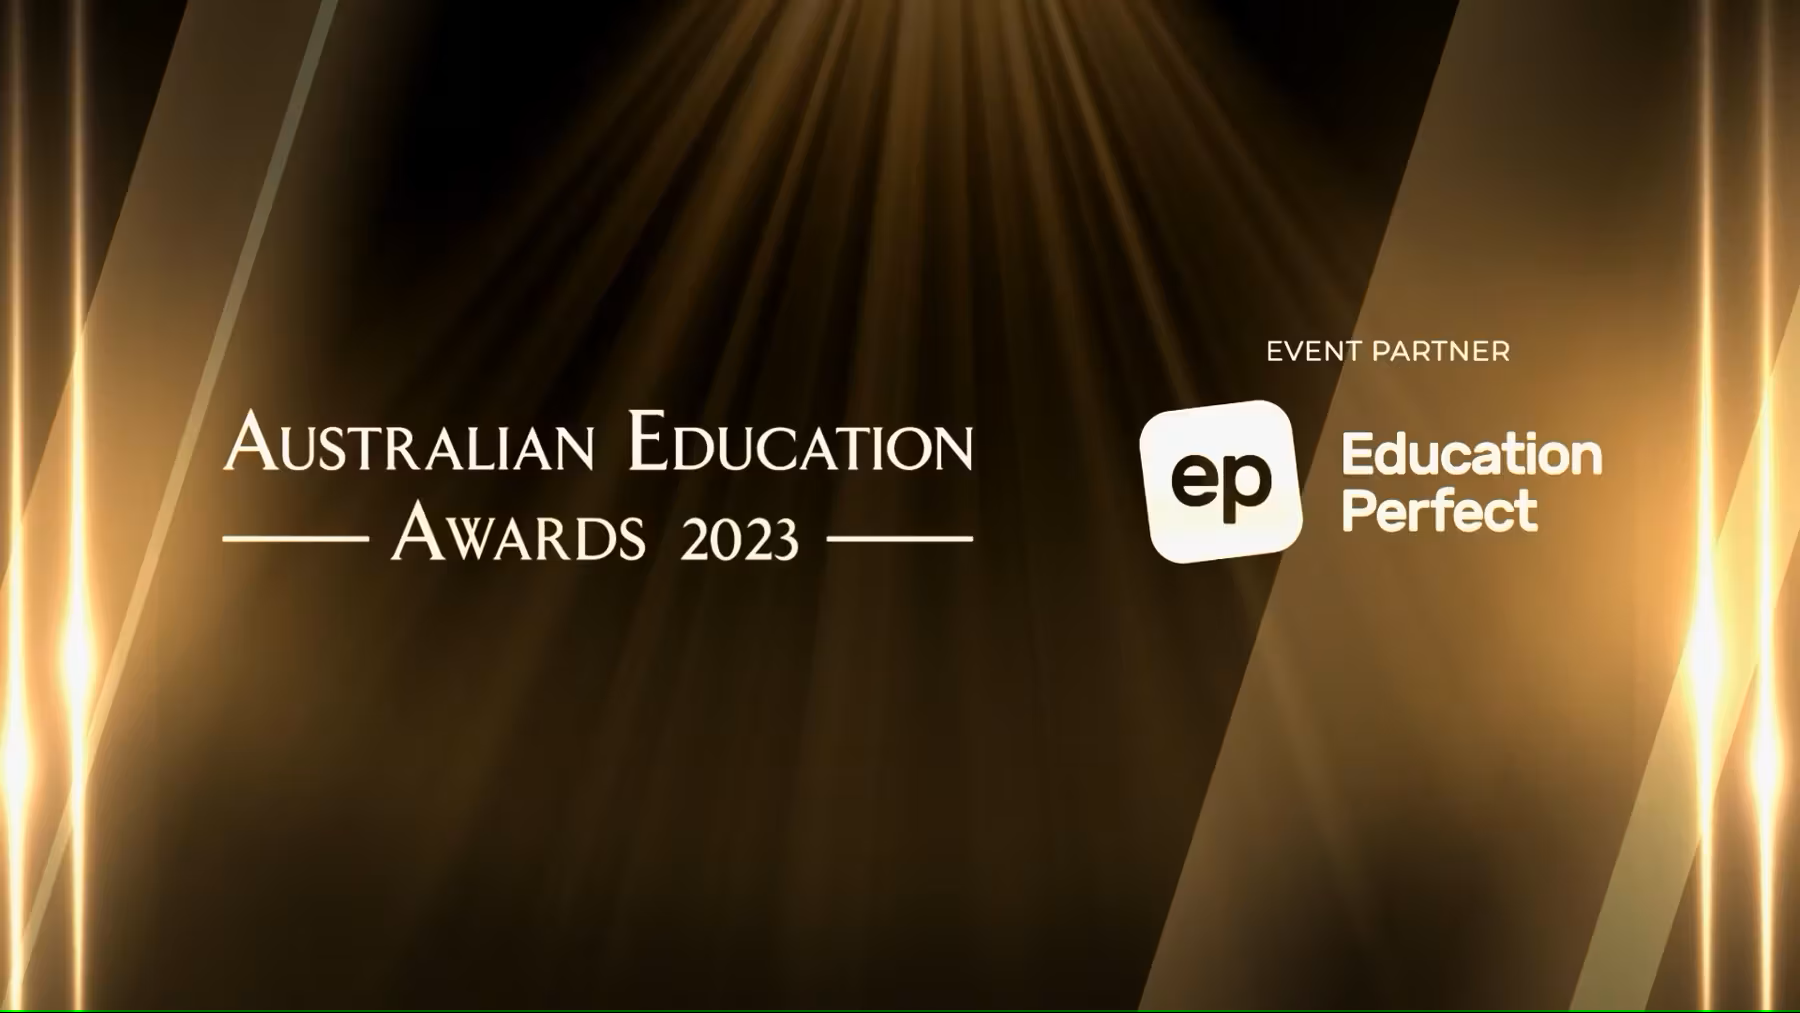 Australian Education Awards 2023: Highlights